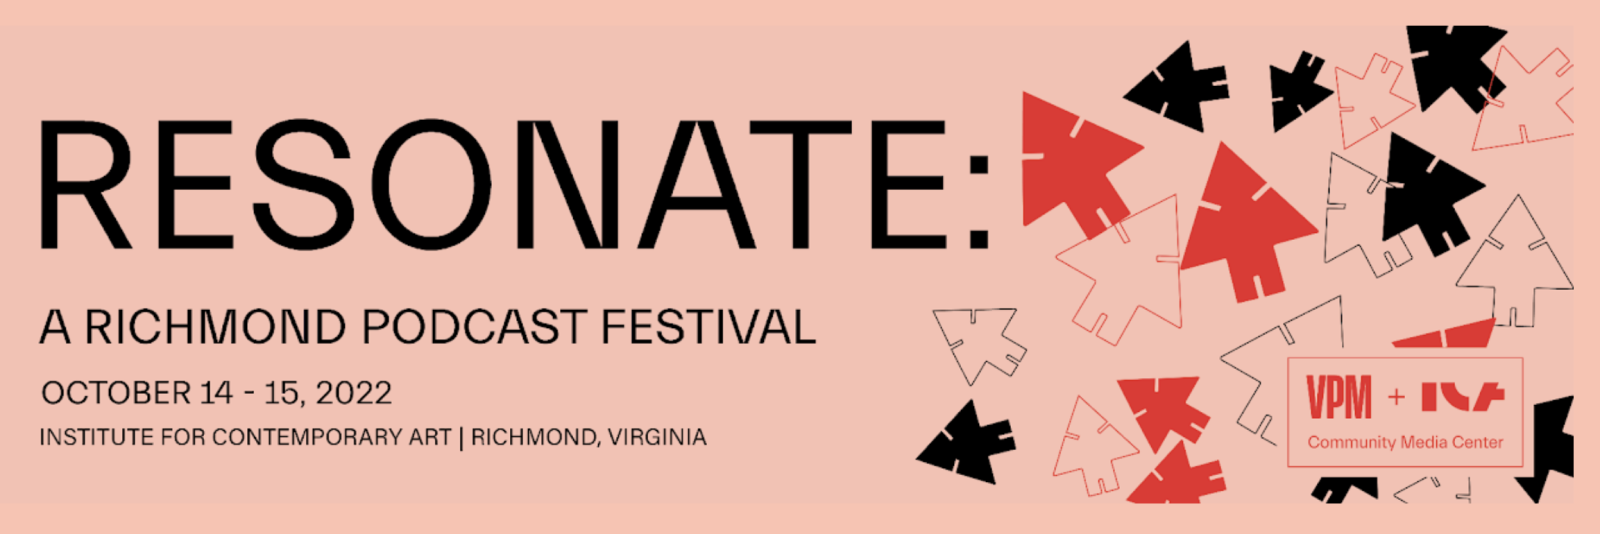 RESONATE podcast festival in richmond virginia 2022 october